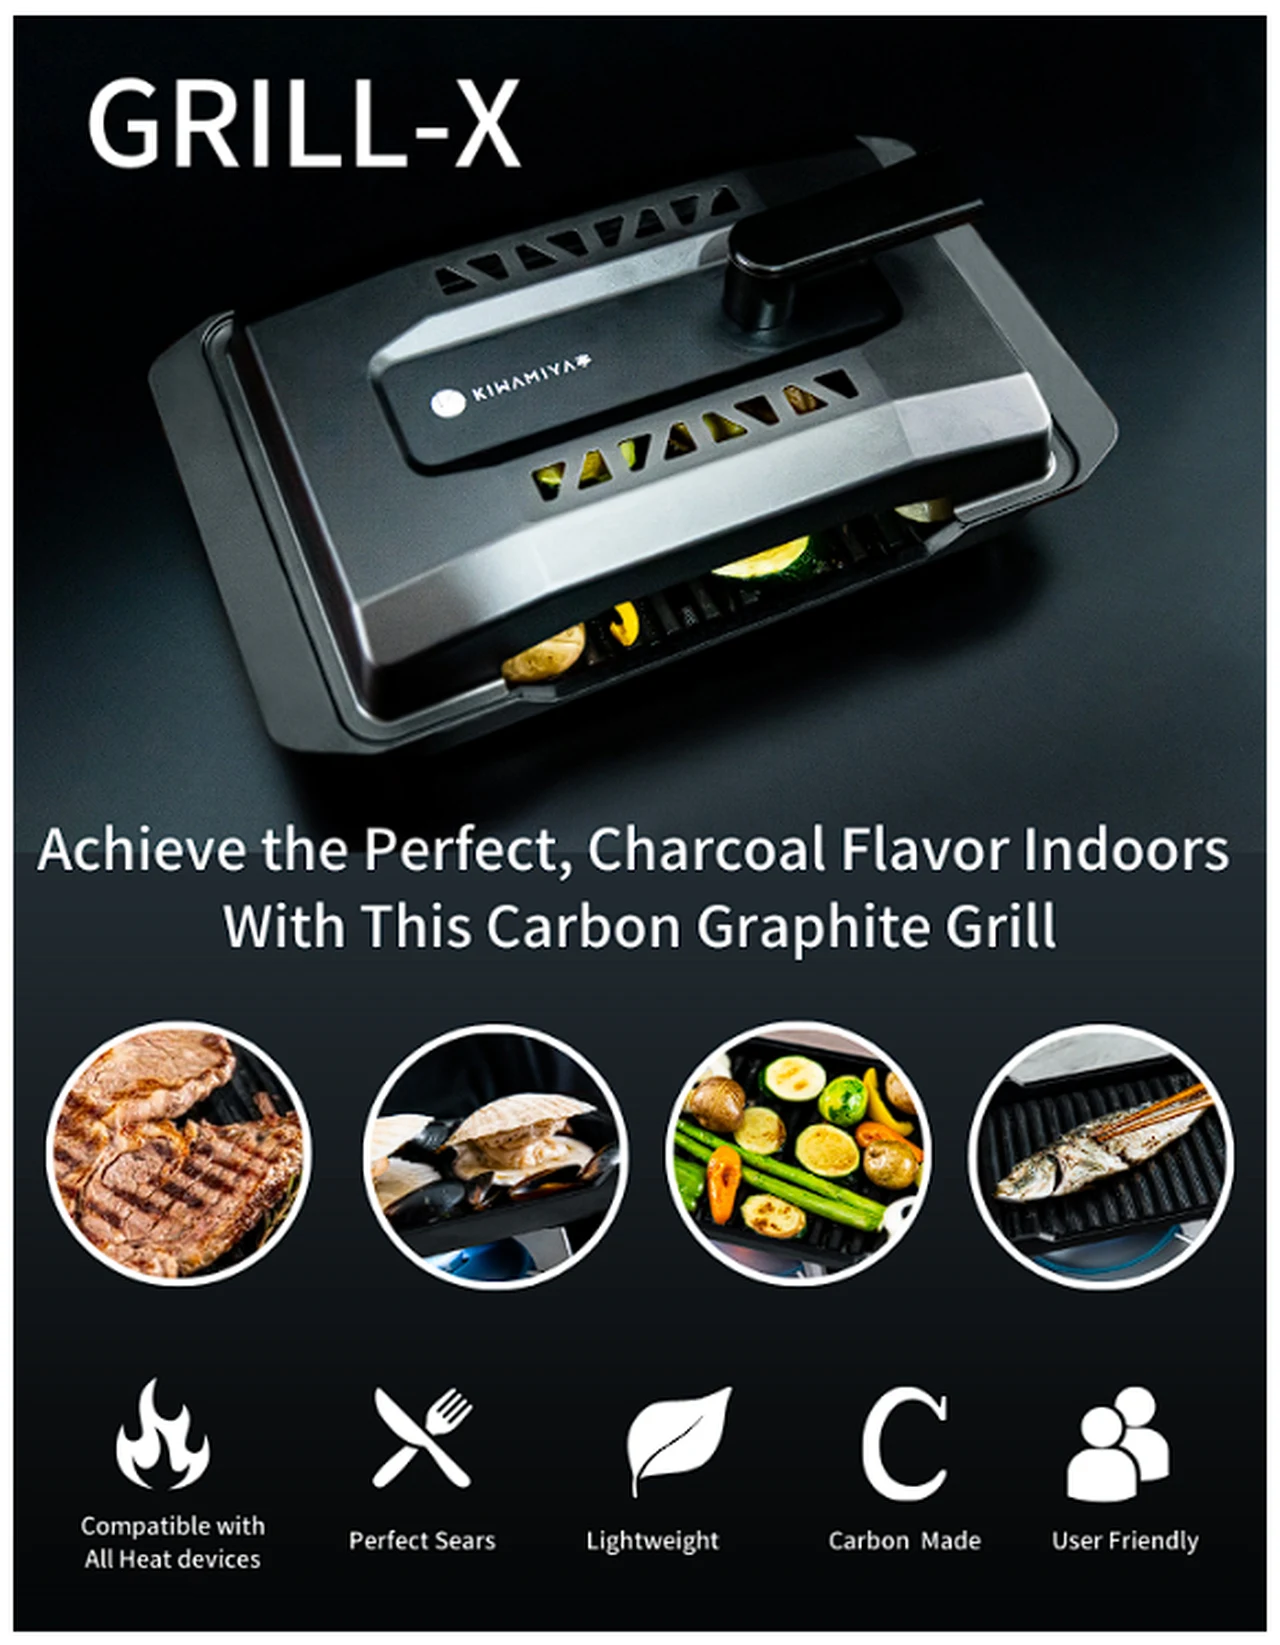 GRILL-X carbon graphite grill